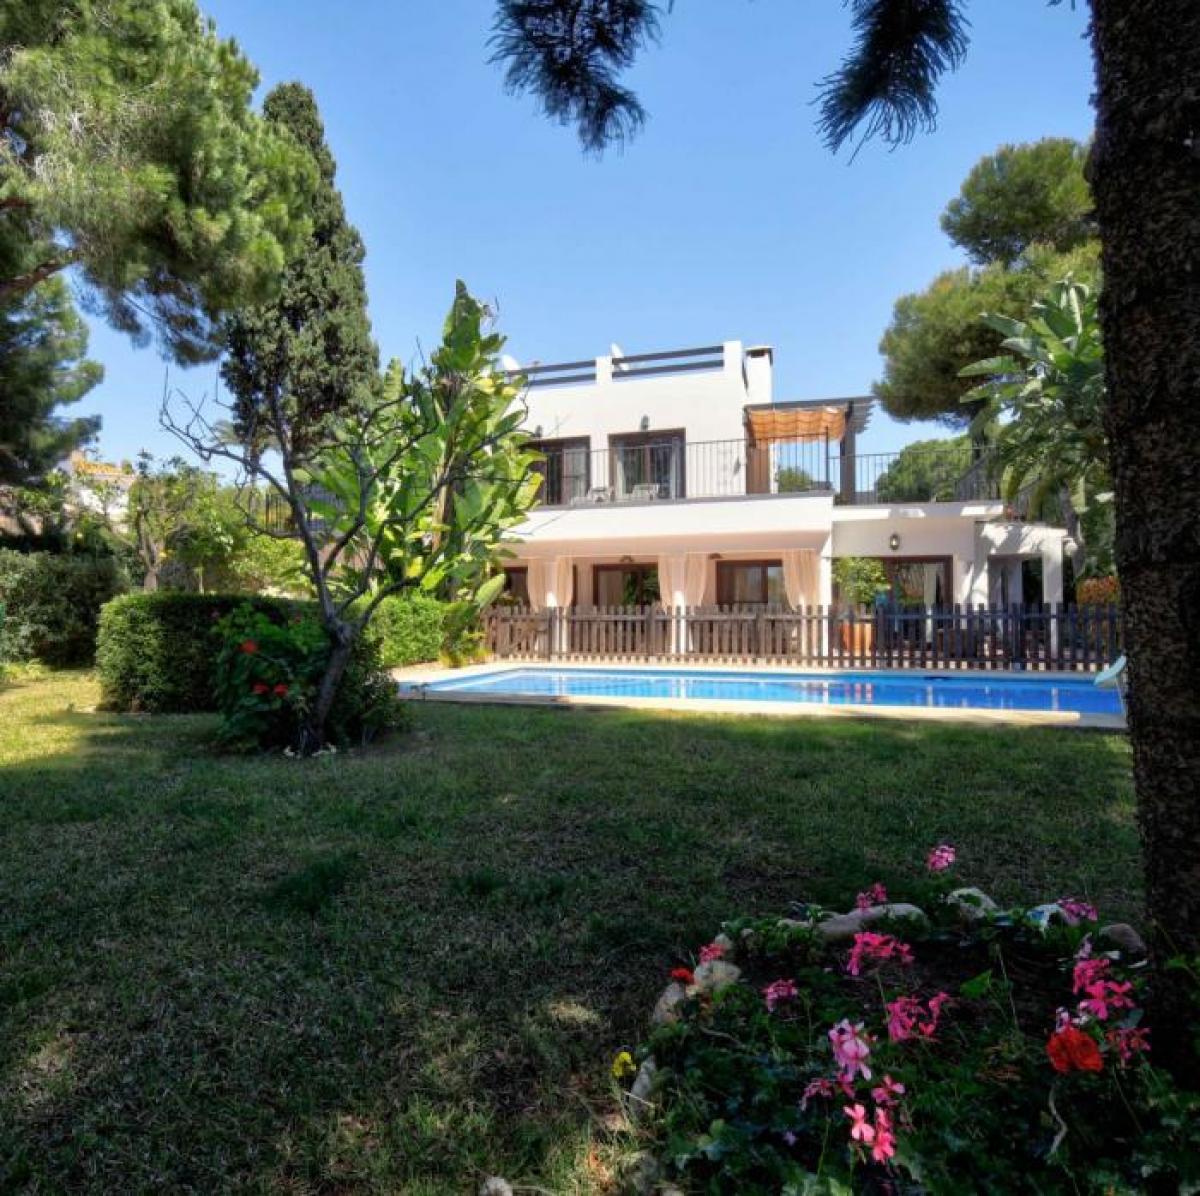 Picture of Apartment For Sale in Hacienda Las Chapas, Malaga, Spain